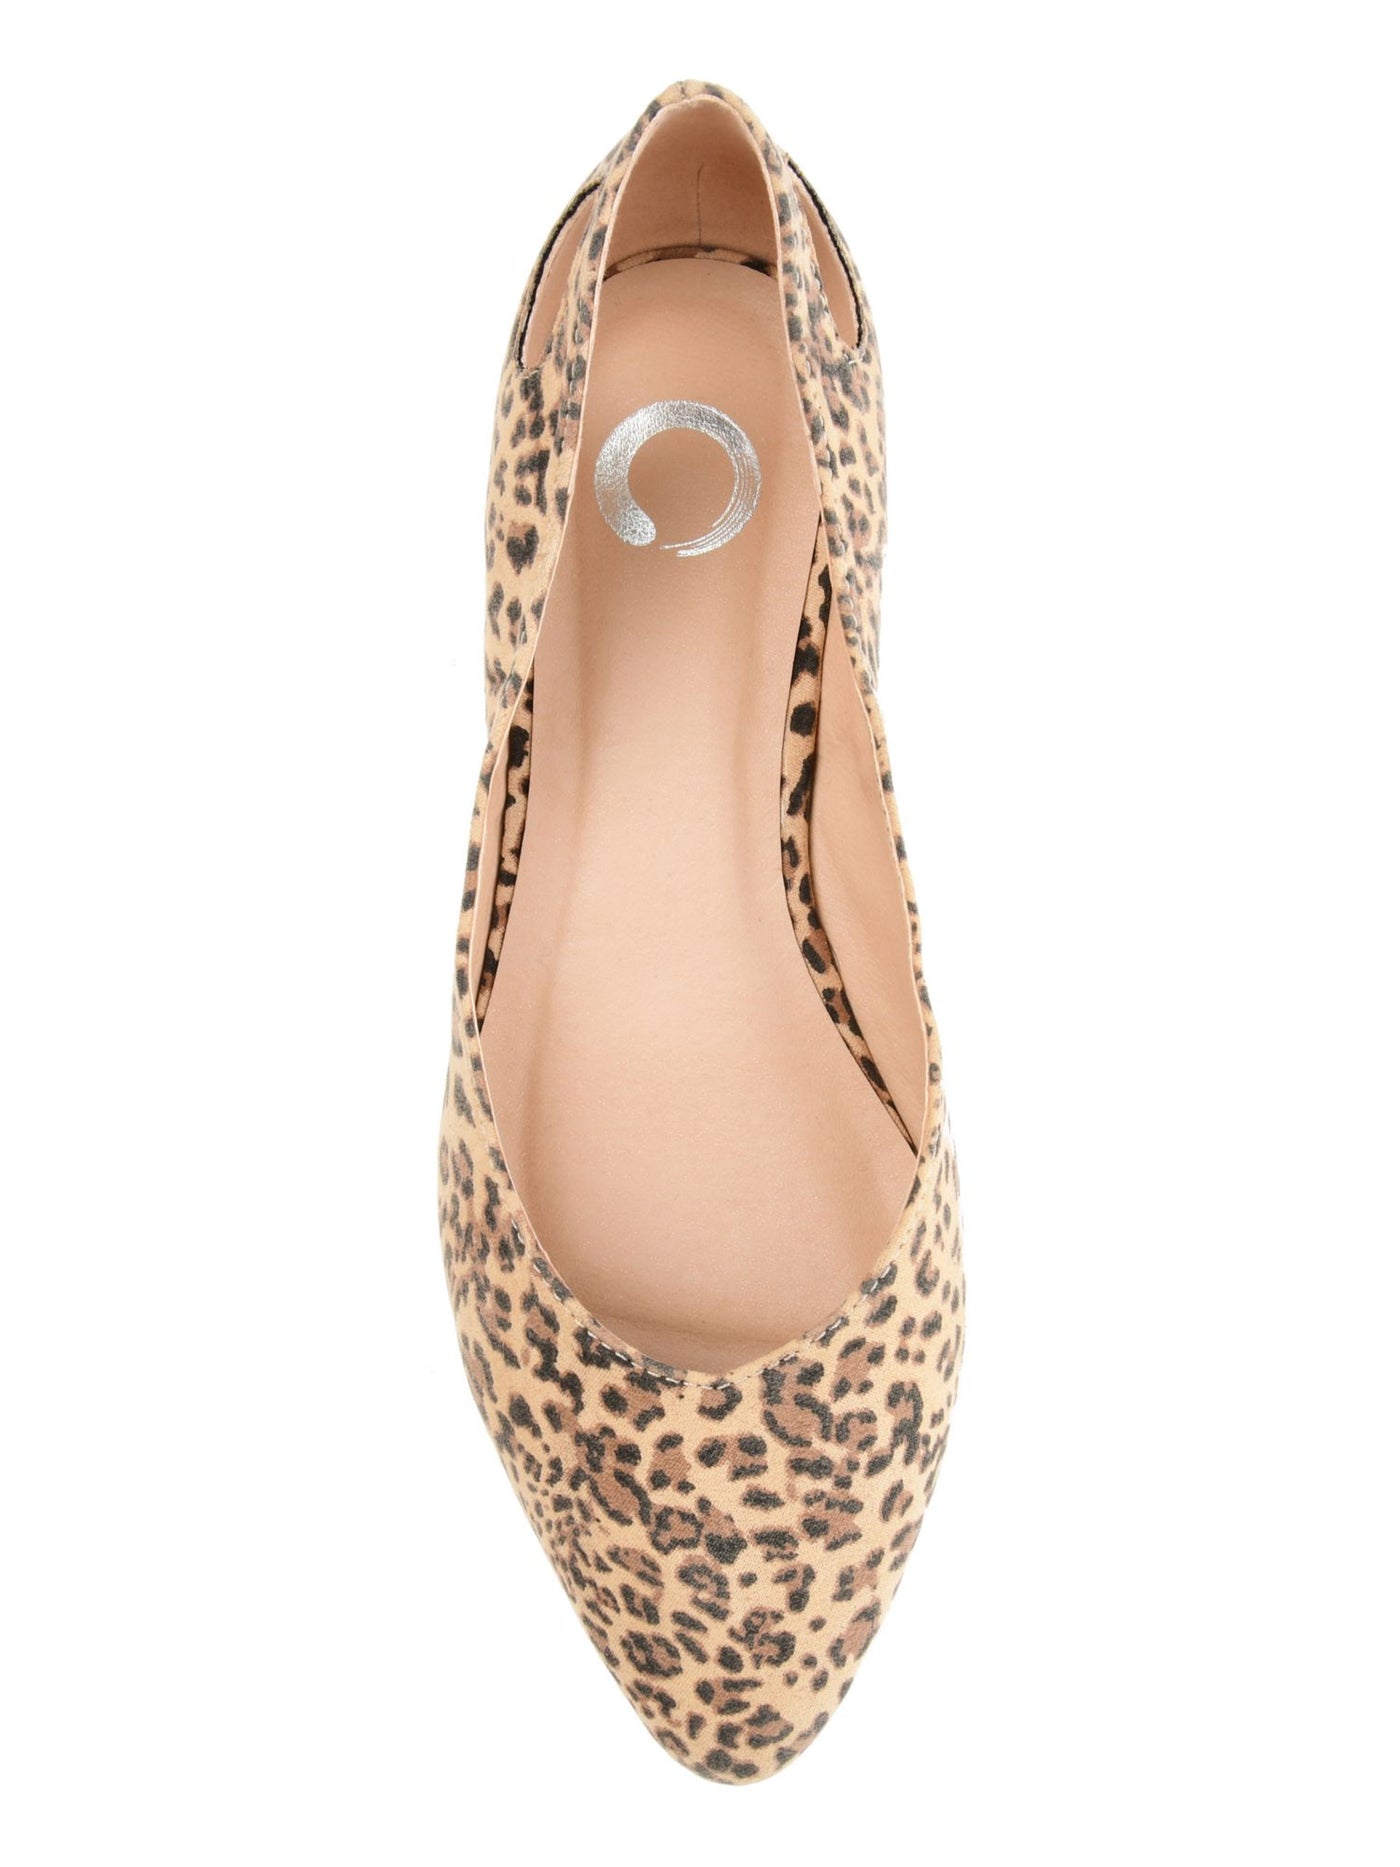 JOURNEE COLLECTION Womens Beige Leopard Print Cut Outs Comfort Devon Almond Toe Block Heel Slip On Ballet Flats 9 M